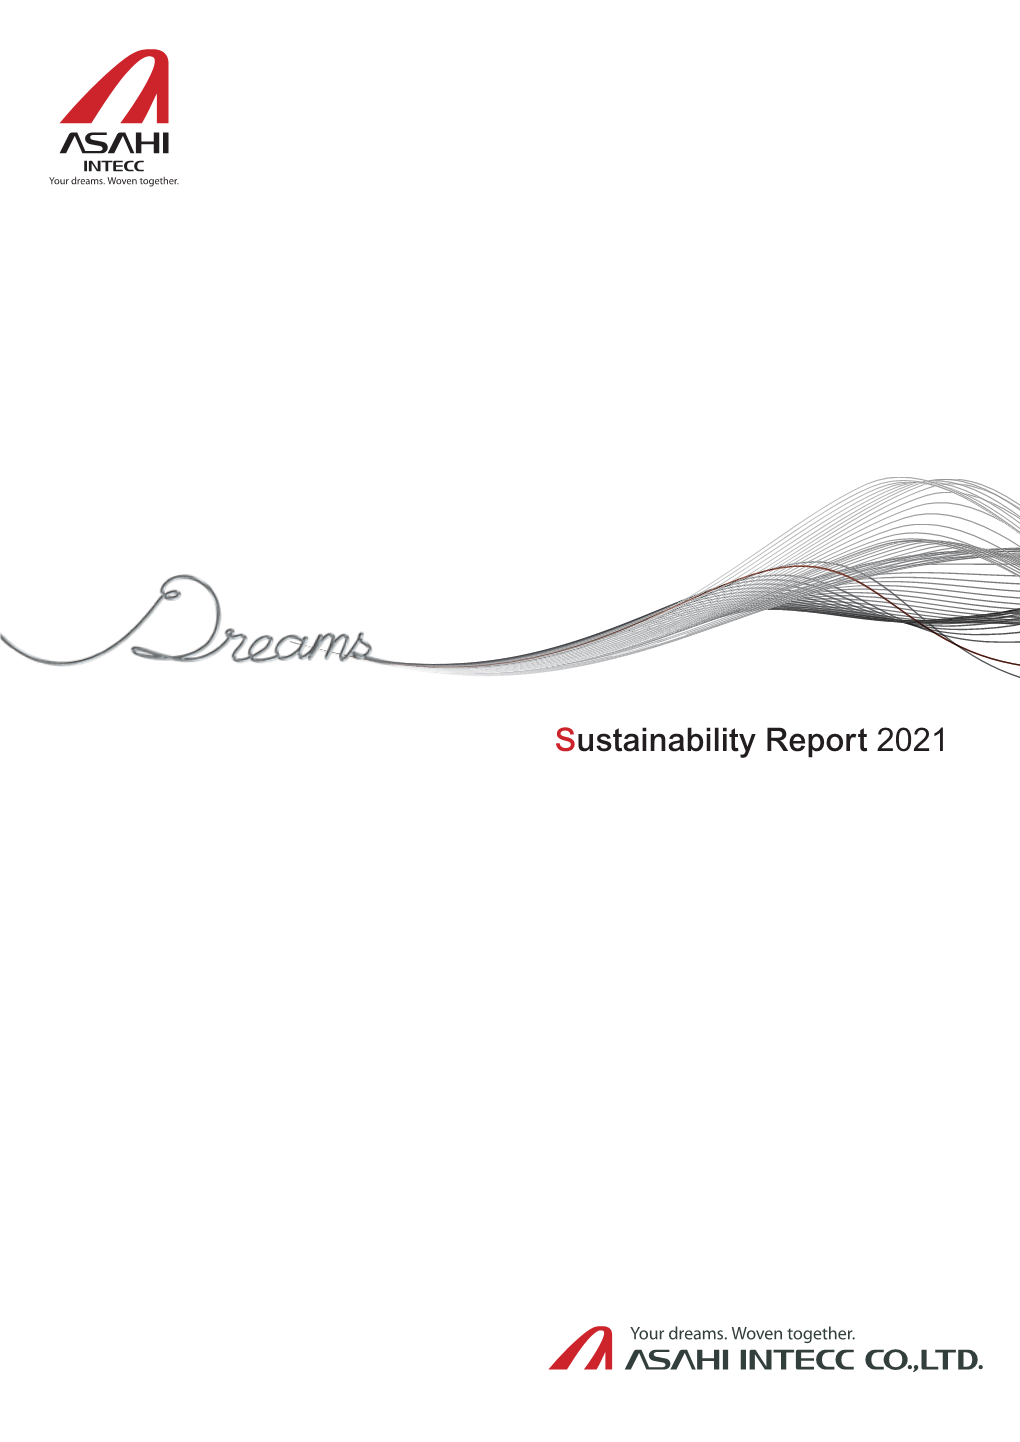 Sustainability Report 2021 Asahi Intecc Group Sustainability Report 2021